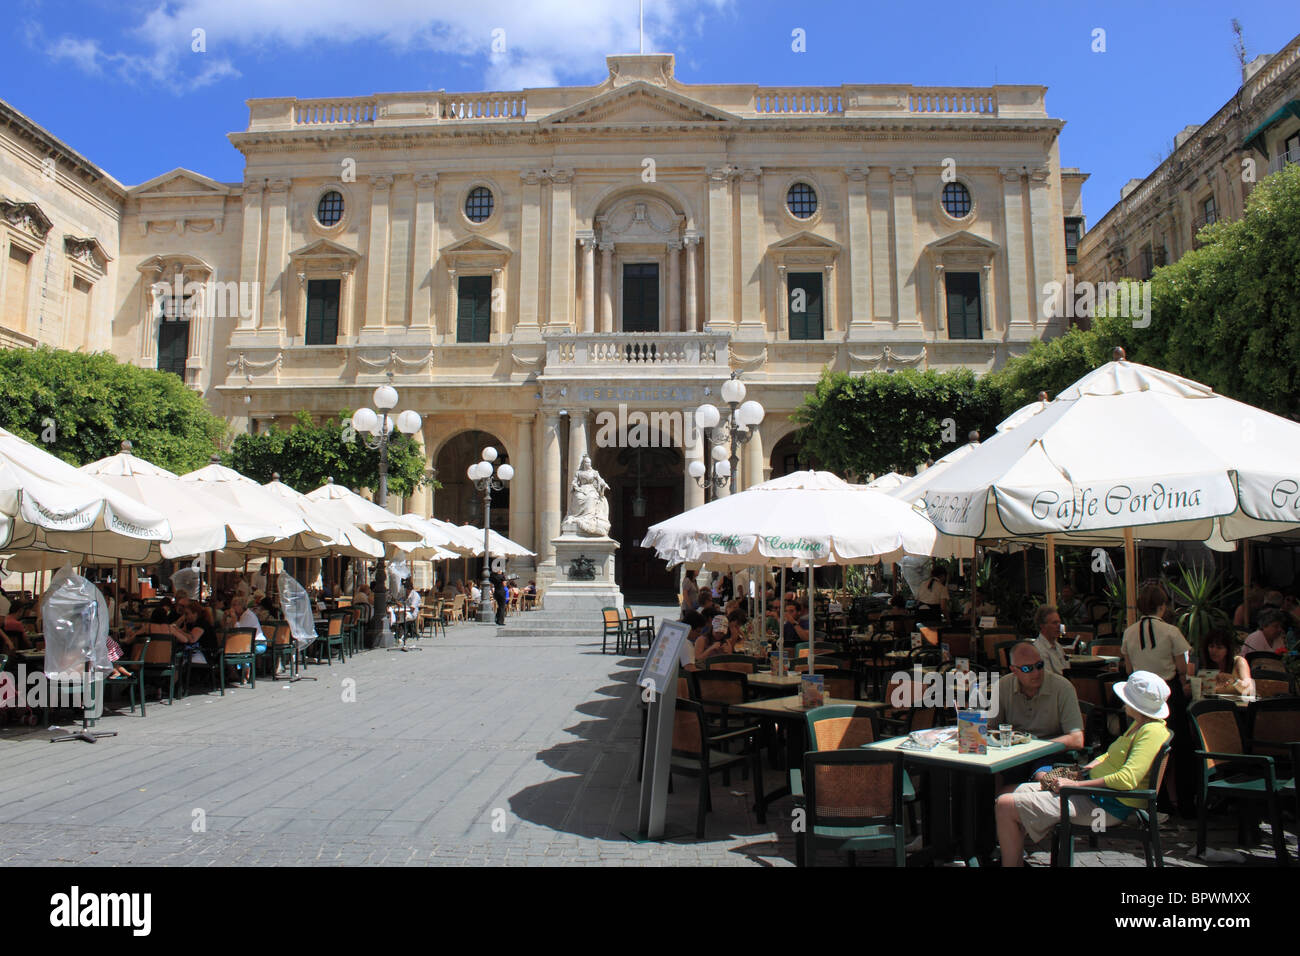 Caffe Cordina terrace and the National Library, Republic Square, Misraħ Ir-Repubblika, Valletta, Malta, Mediterranean, Europe Stock Photo